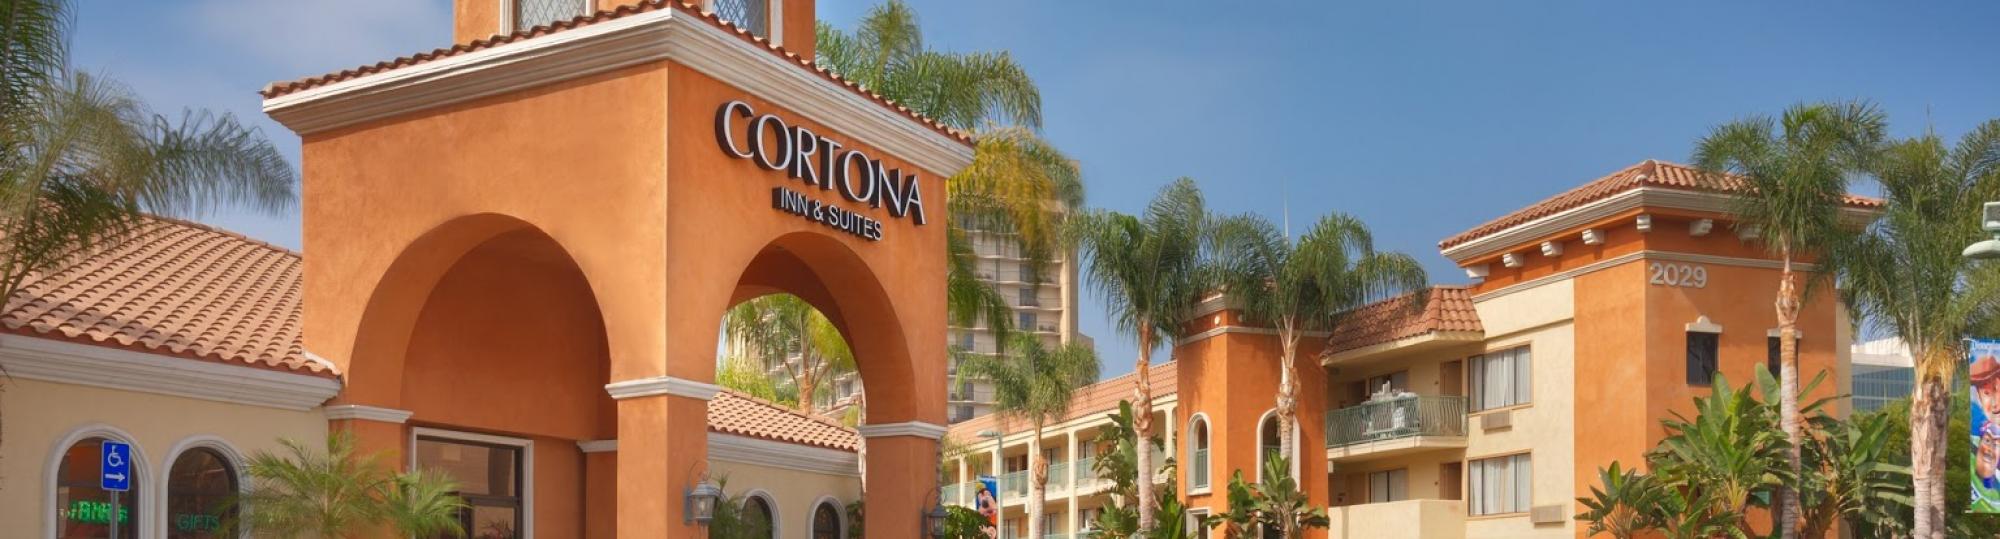 Cortona Inn & Suites Anaheim Resort Military Discount with Veterans Advantage